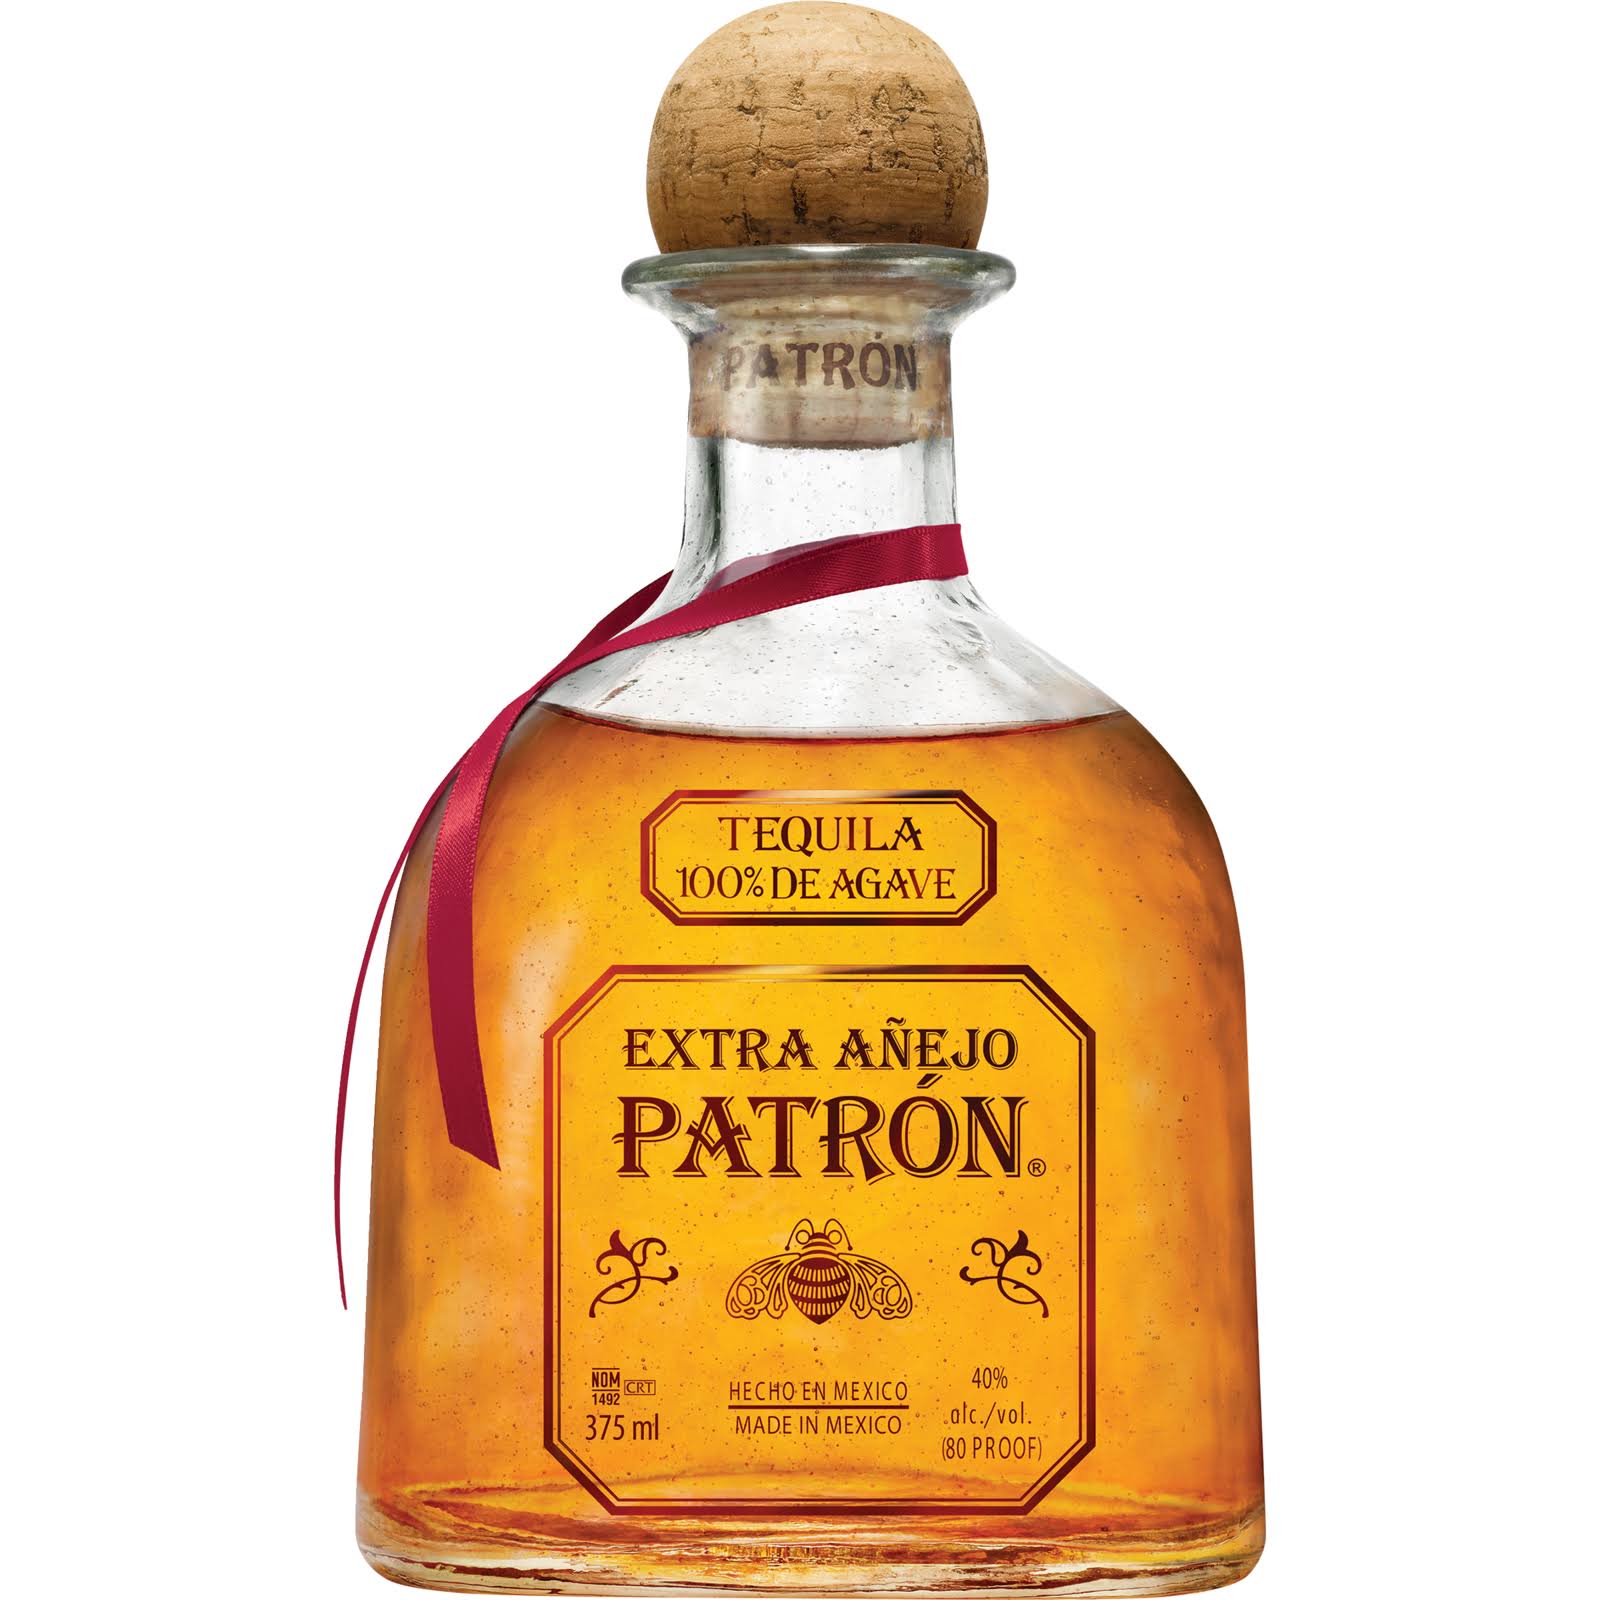 Patron Tequila, 100% De Agave, Extra Anejo - 375 ml